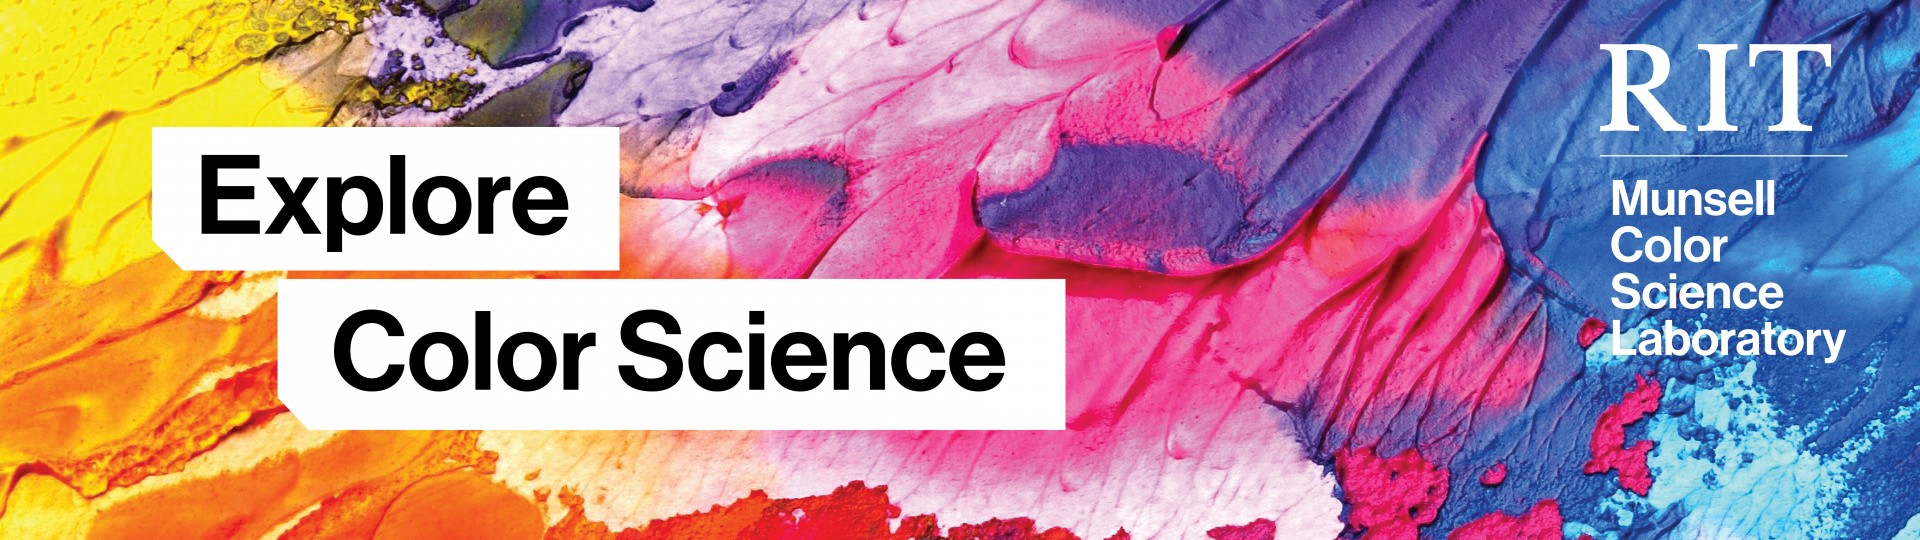 explore color science at rit q&a